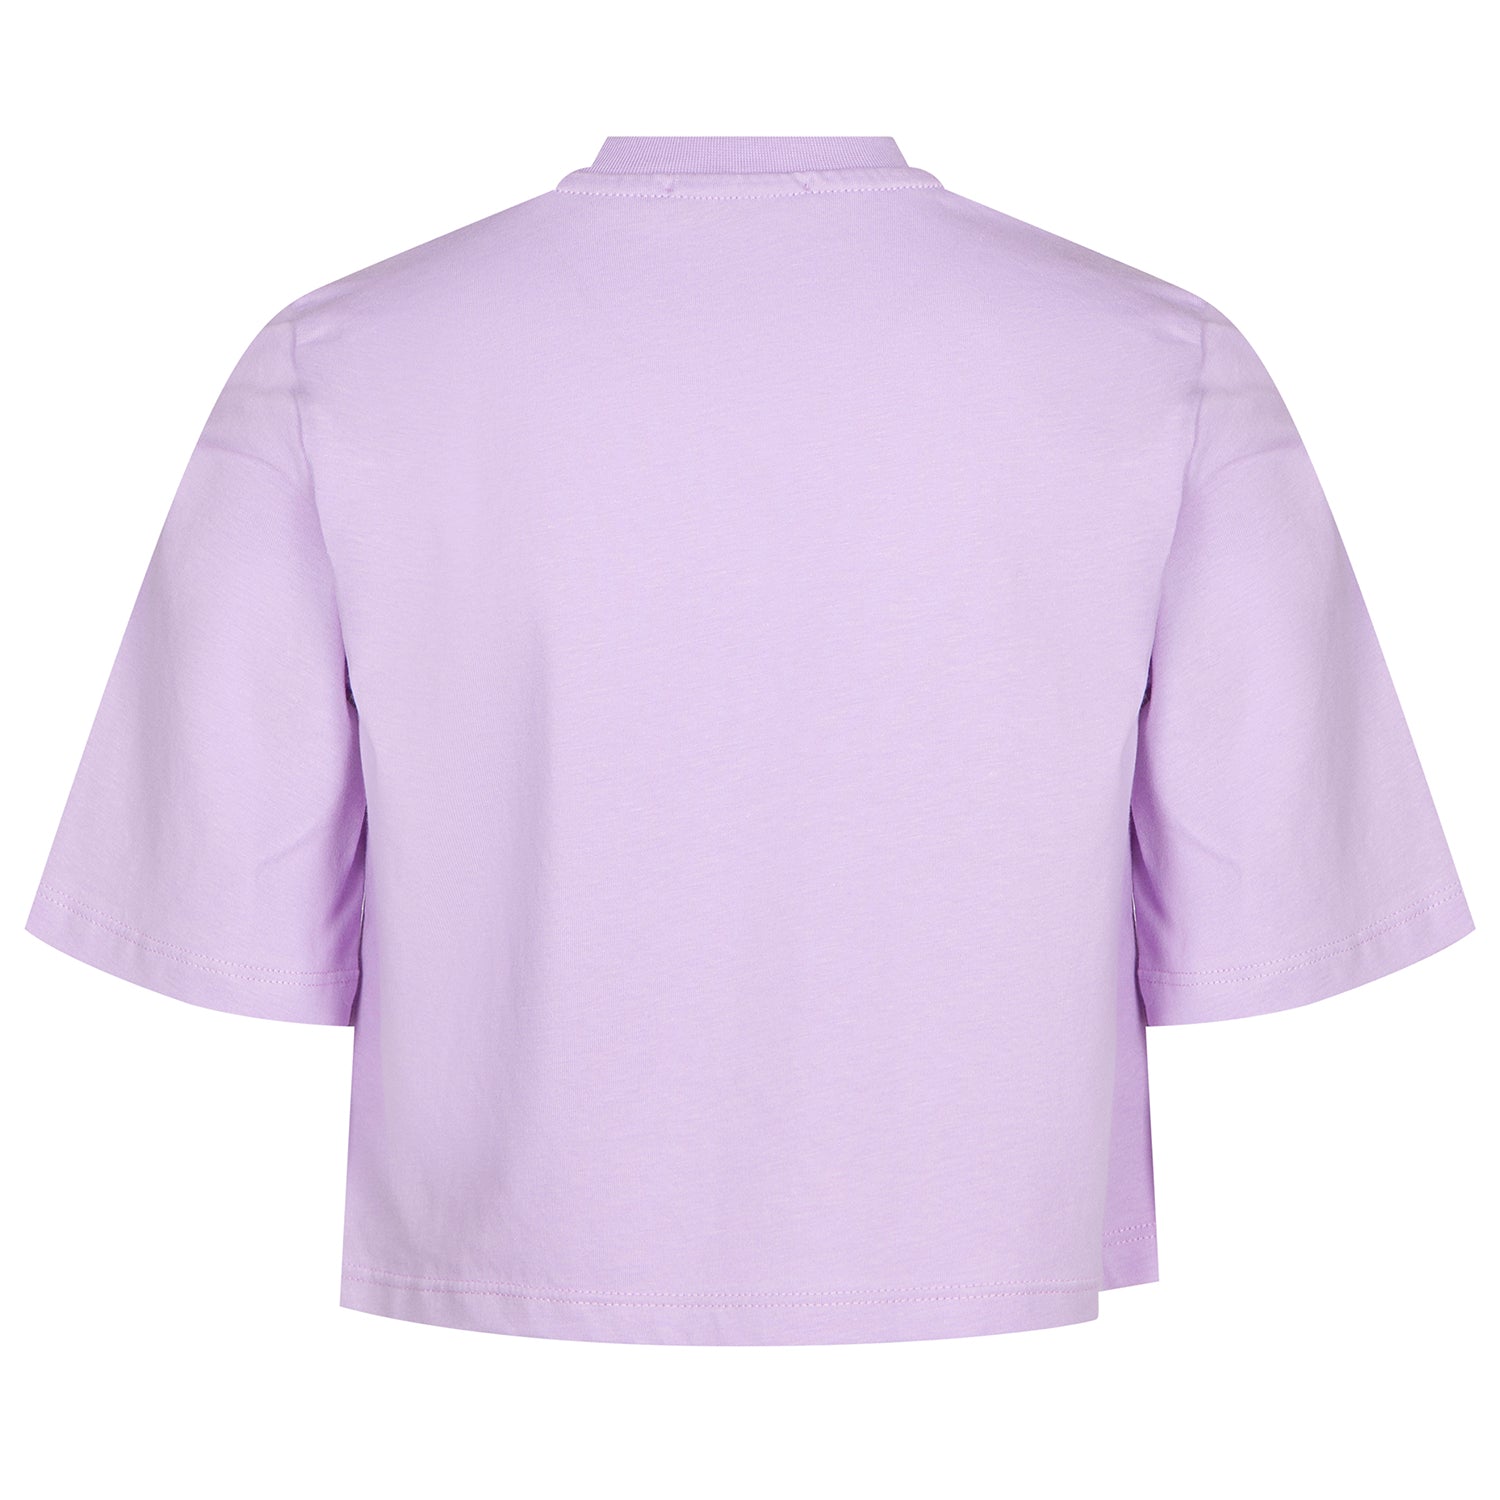 Girls Lilac Printed Cotton T-Shirt